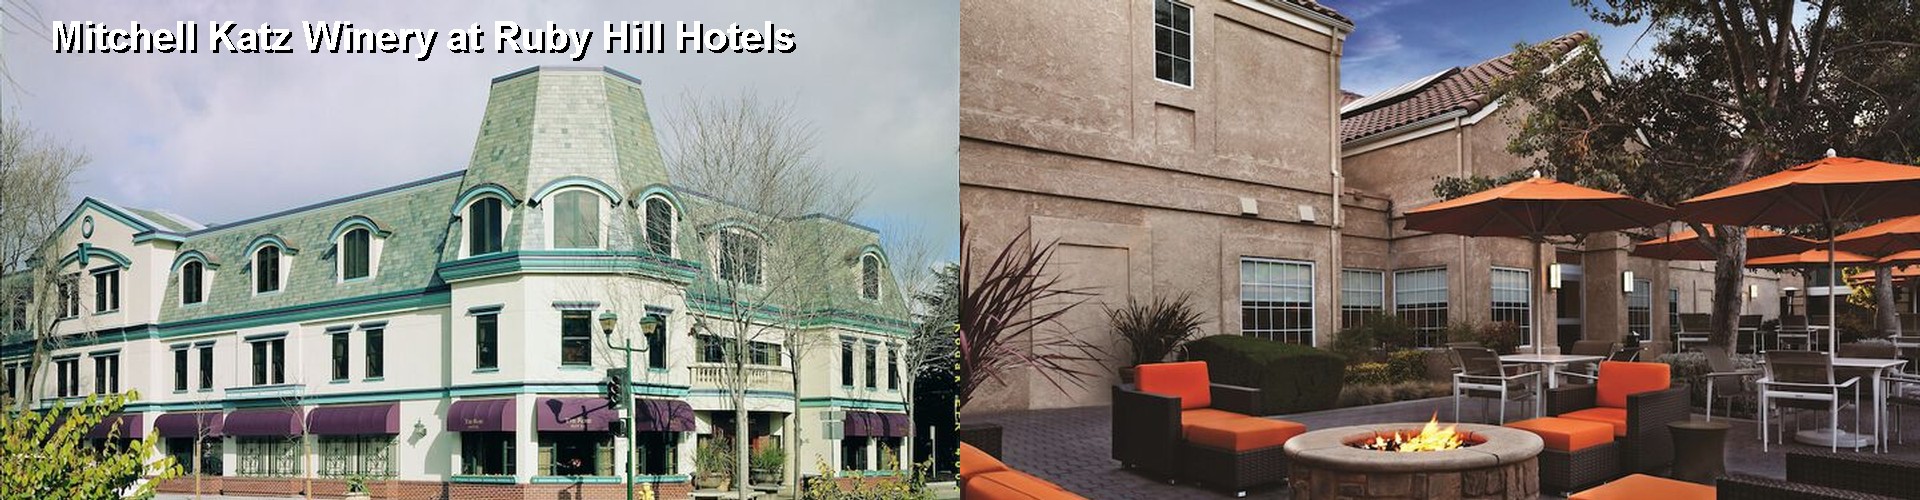 5 Best Hotels near Mitchell Katz Winery at Ruby Hill